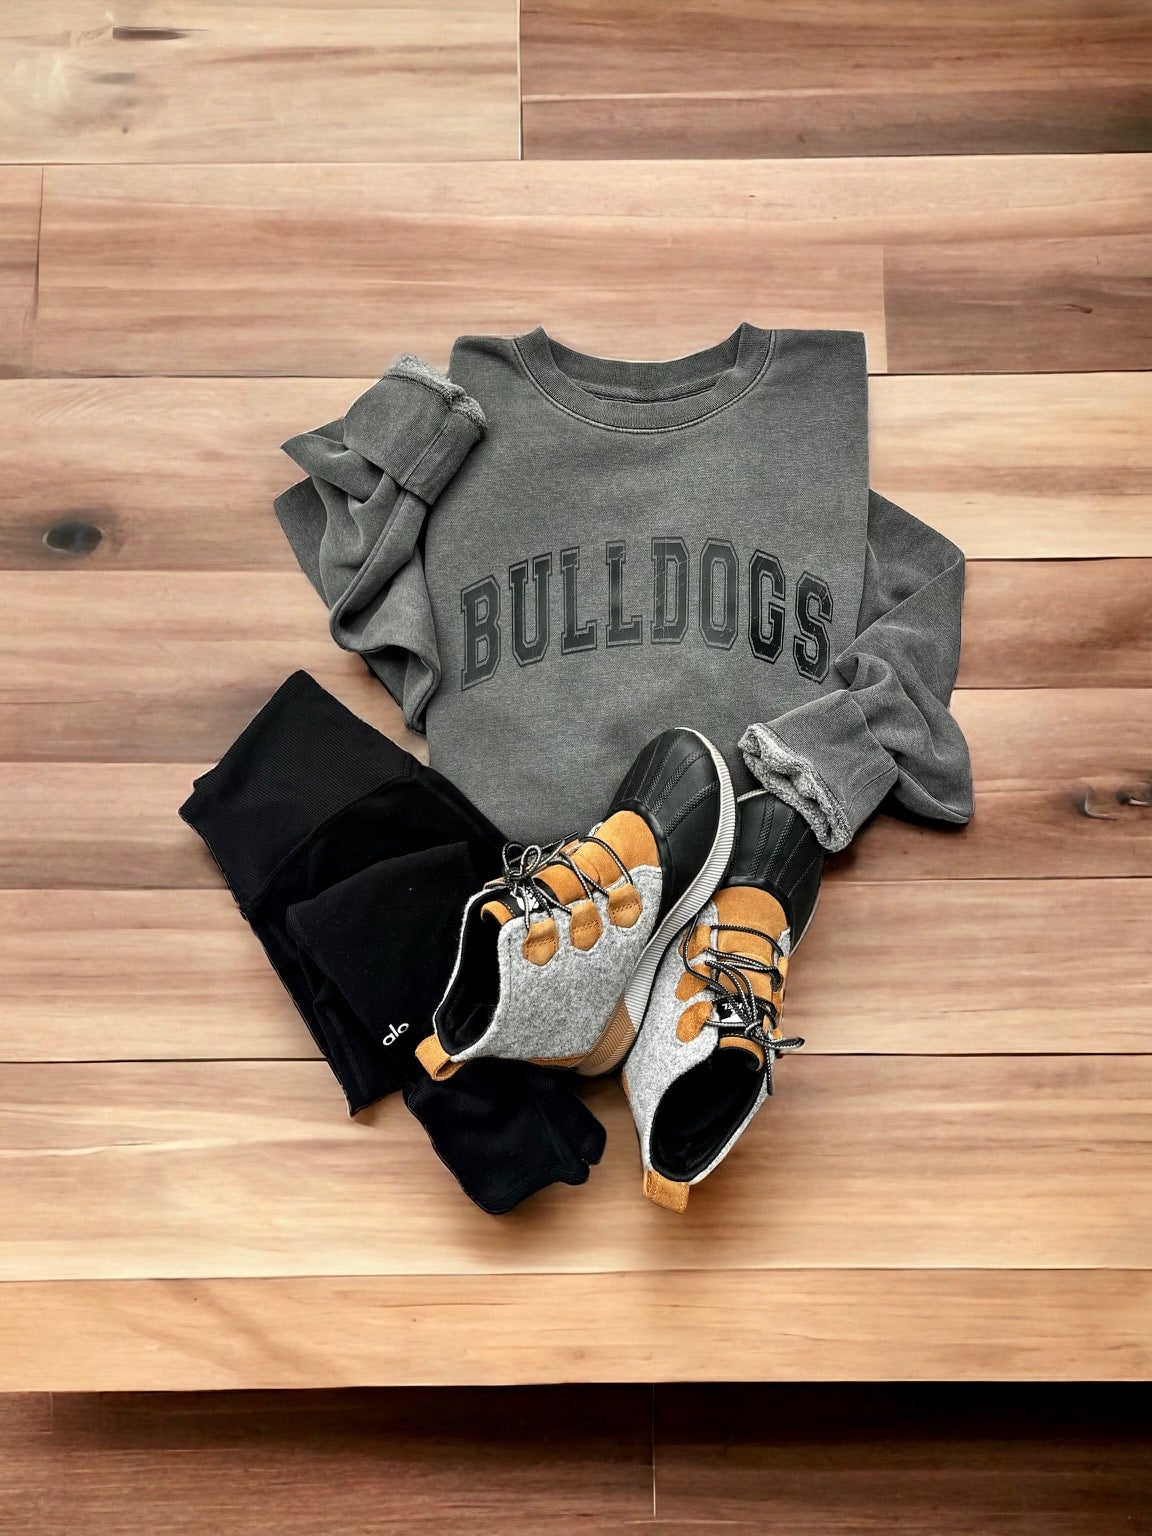  Viewamoon Bulldog Black Girls Athletic Clothes for